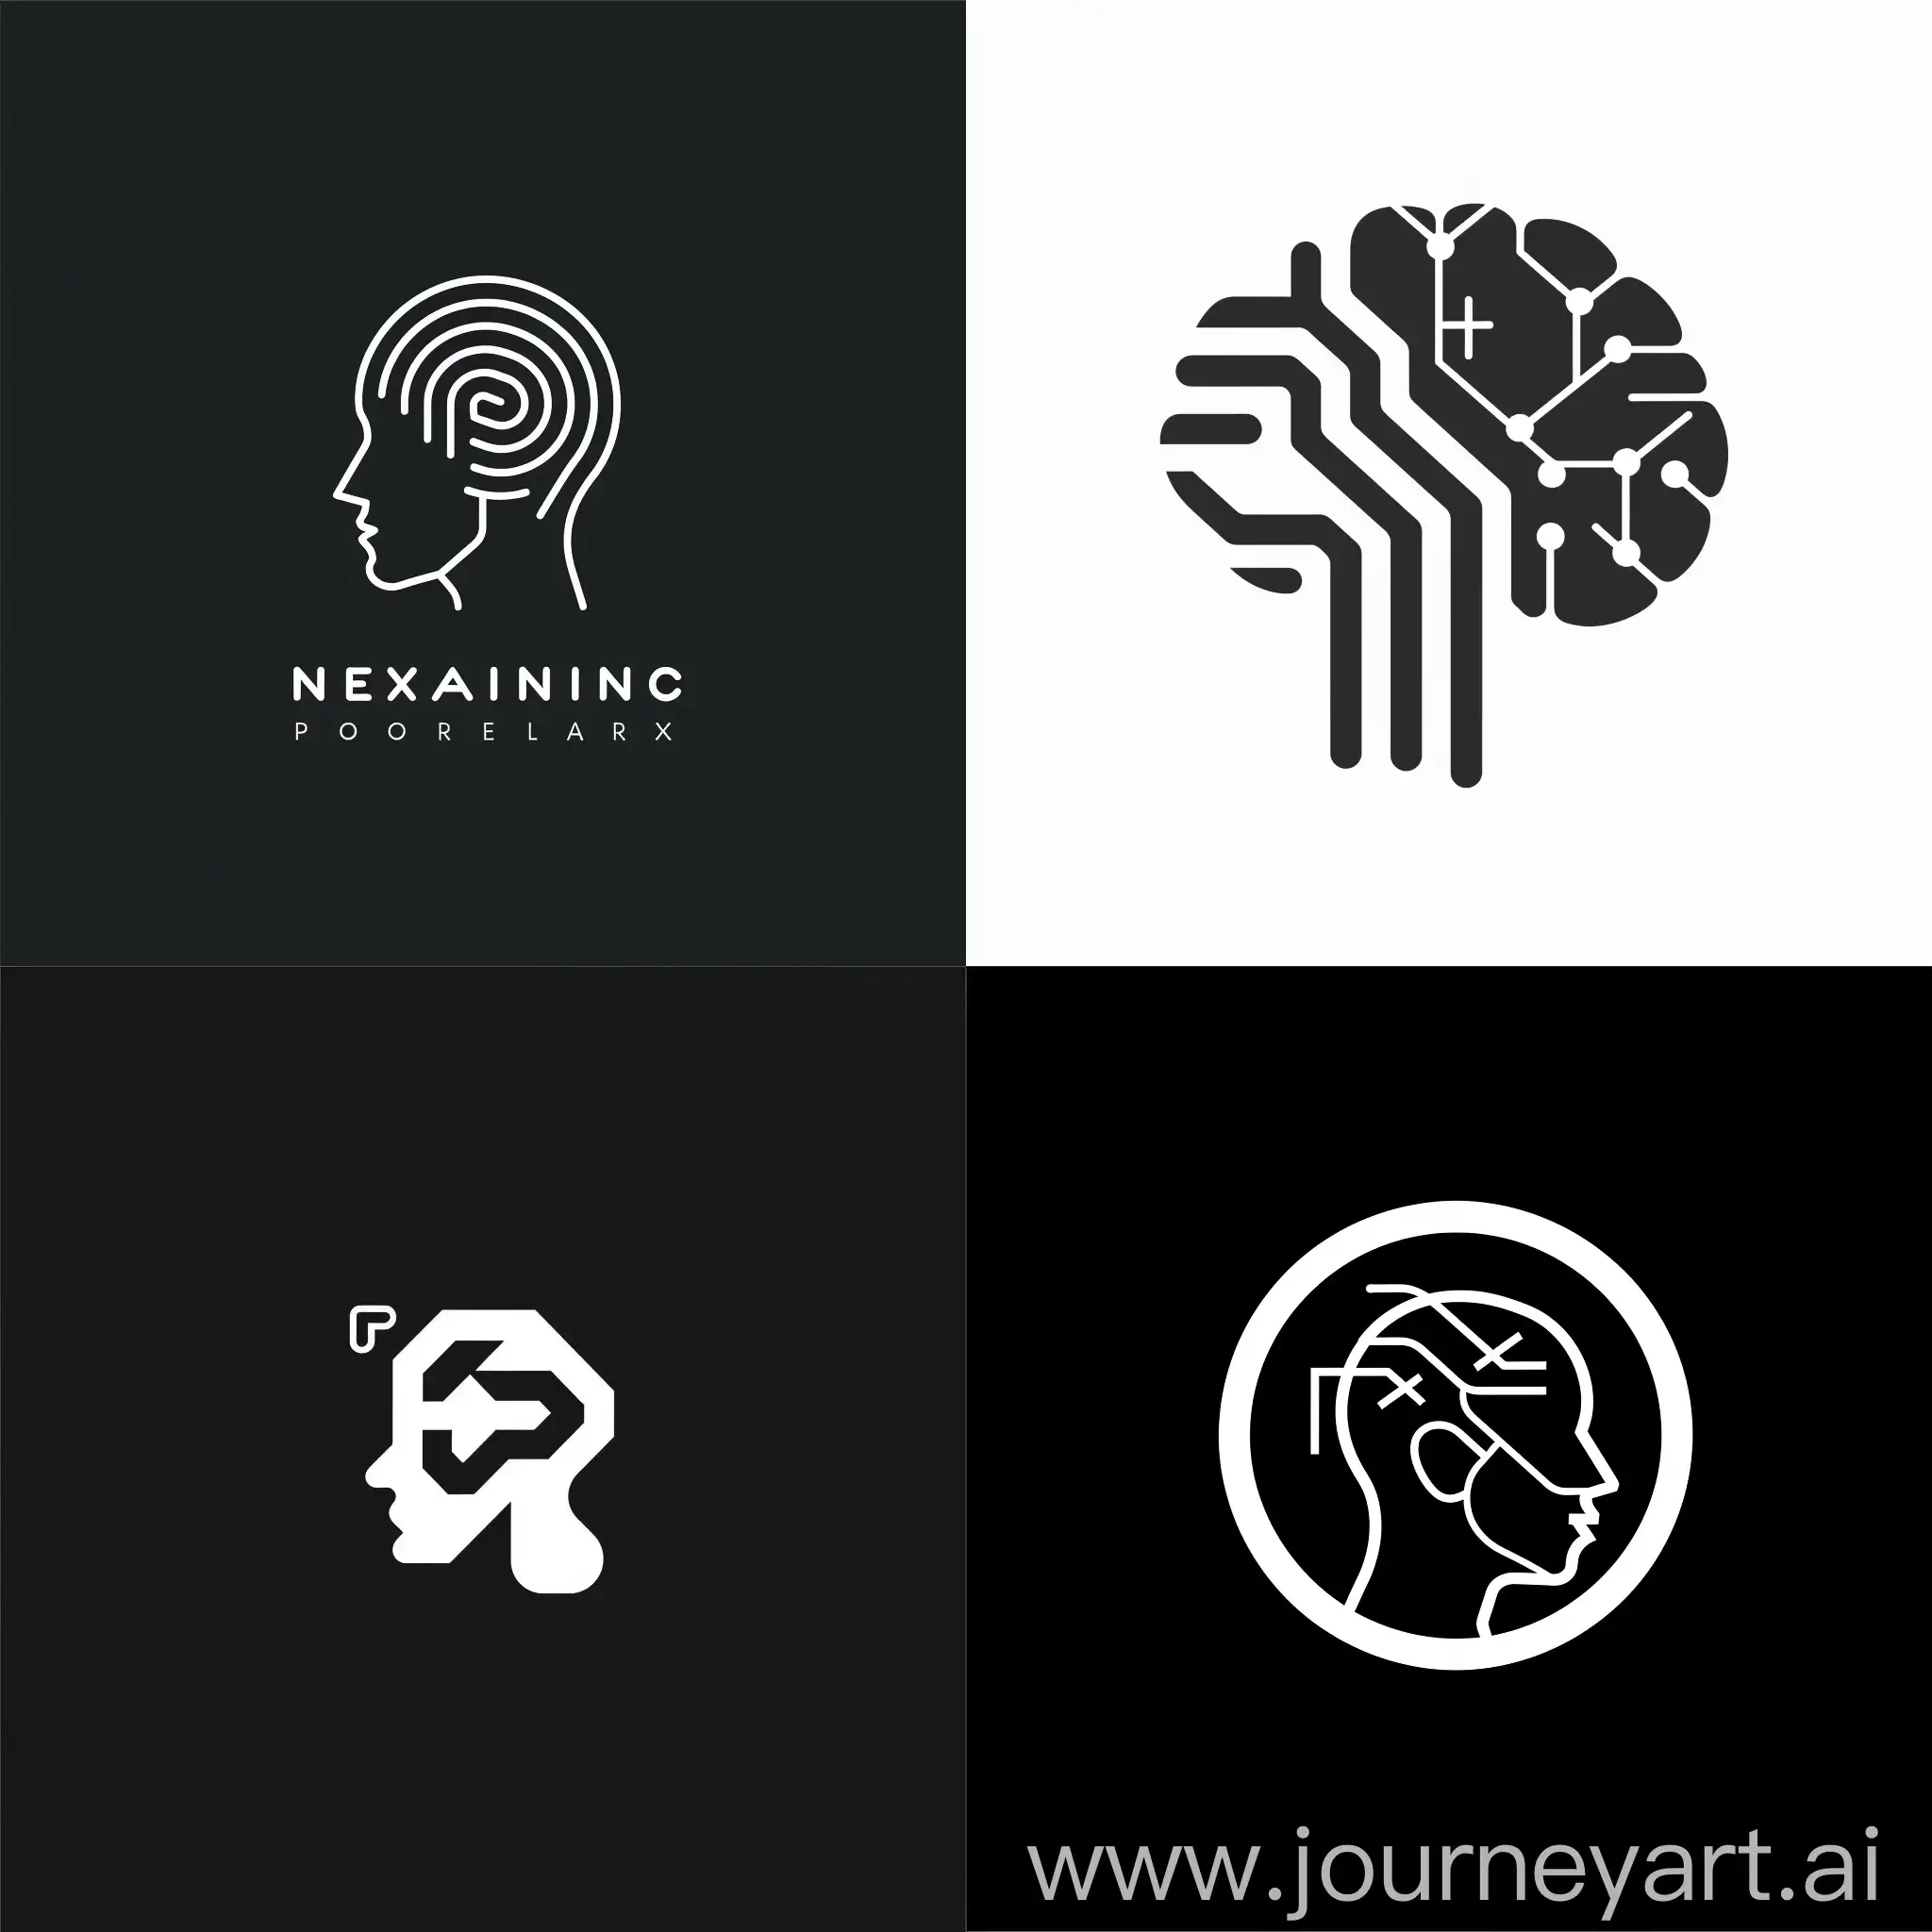 logo for AI crm platform minimalistic black and white similar to neauralink logo